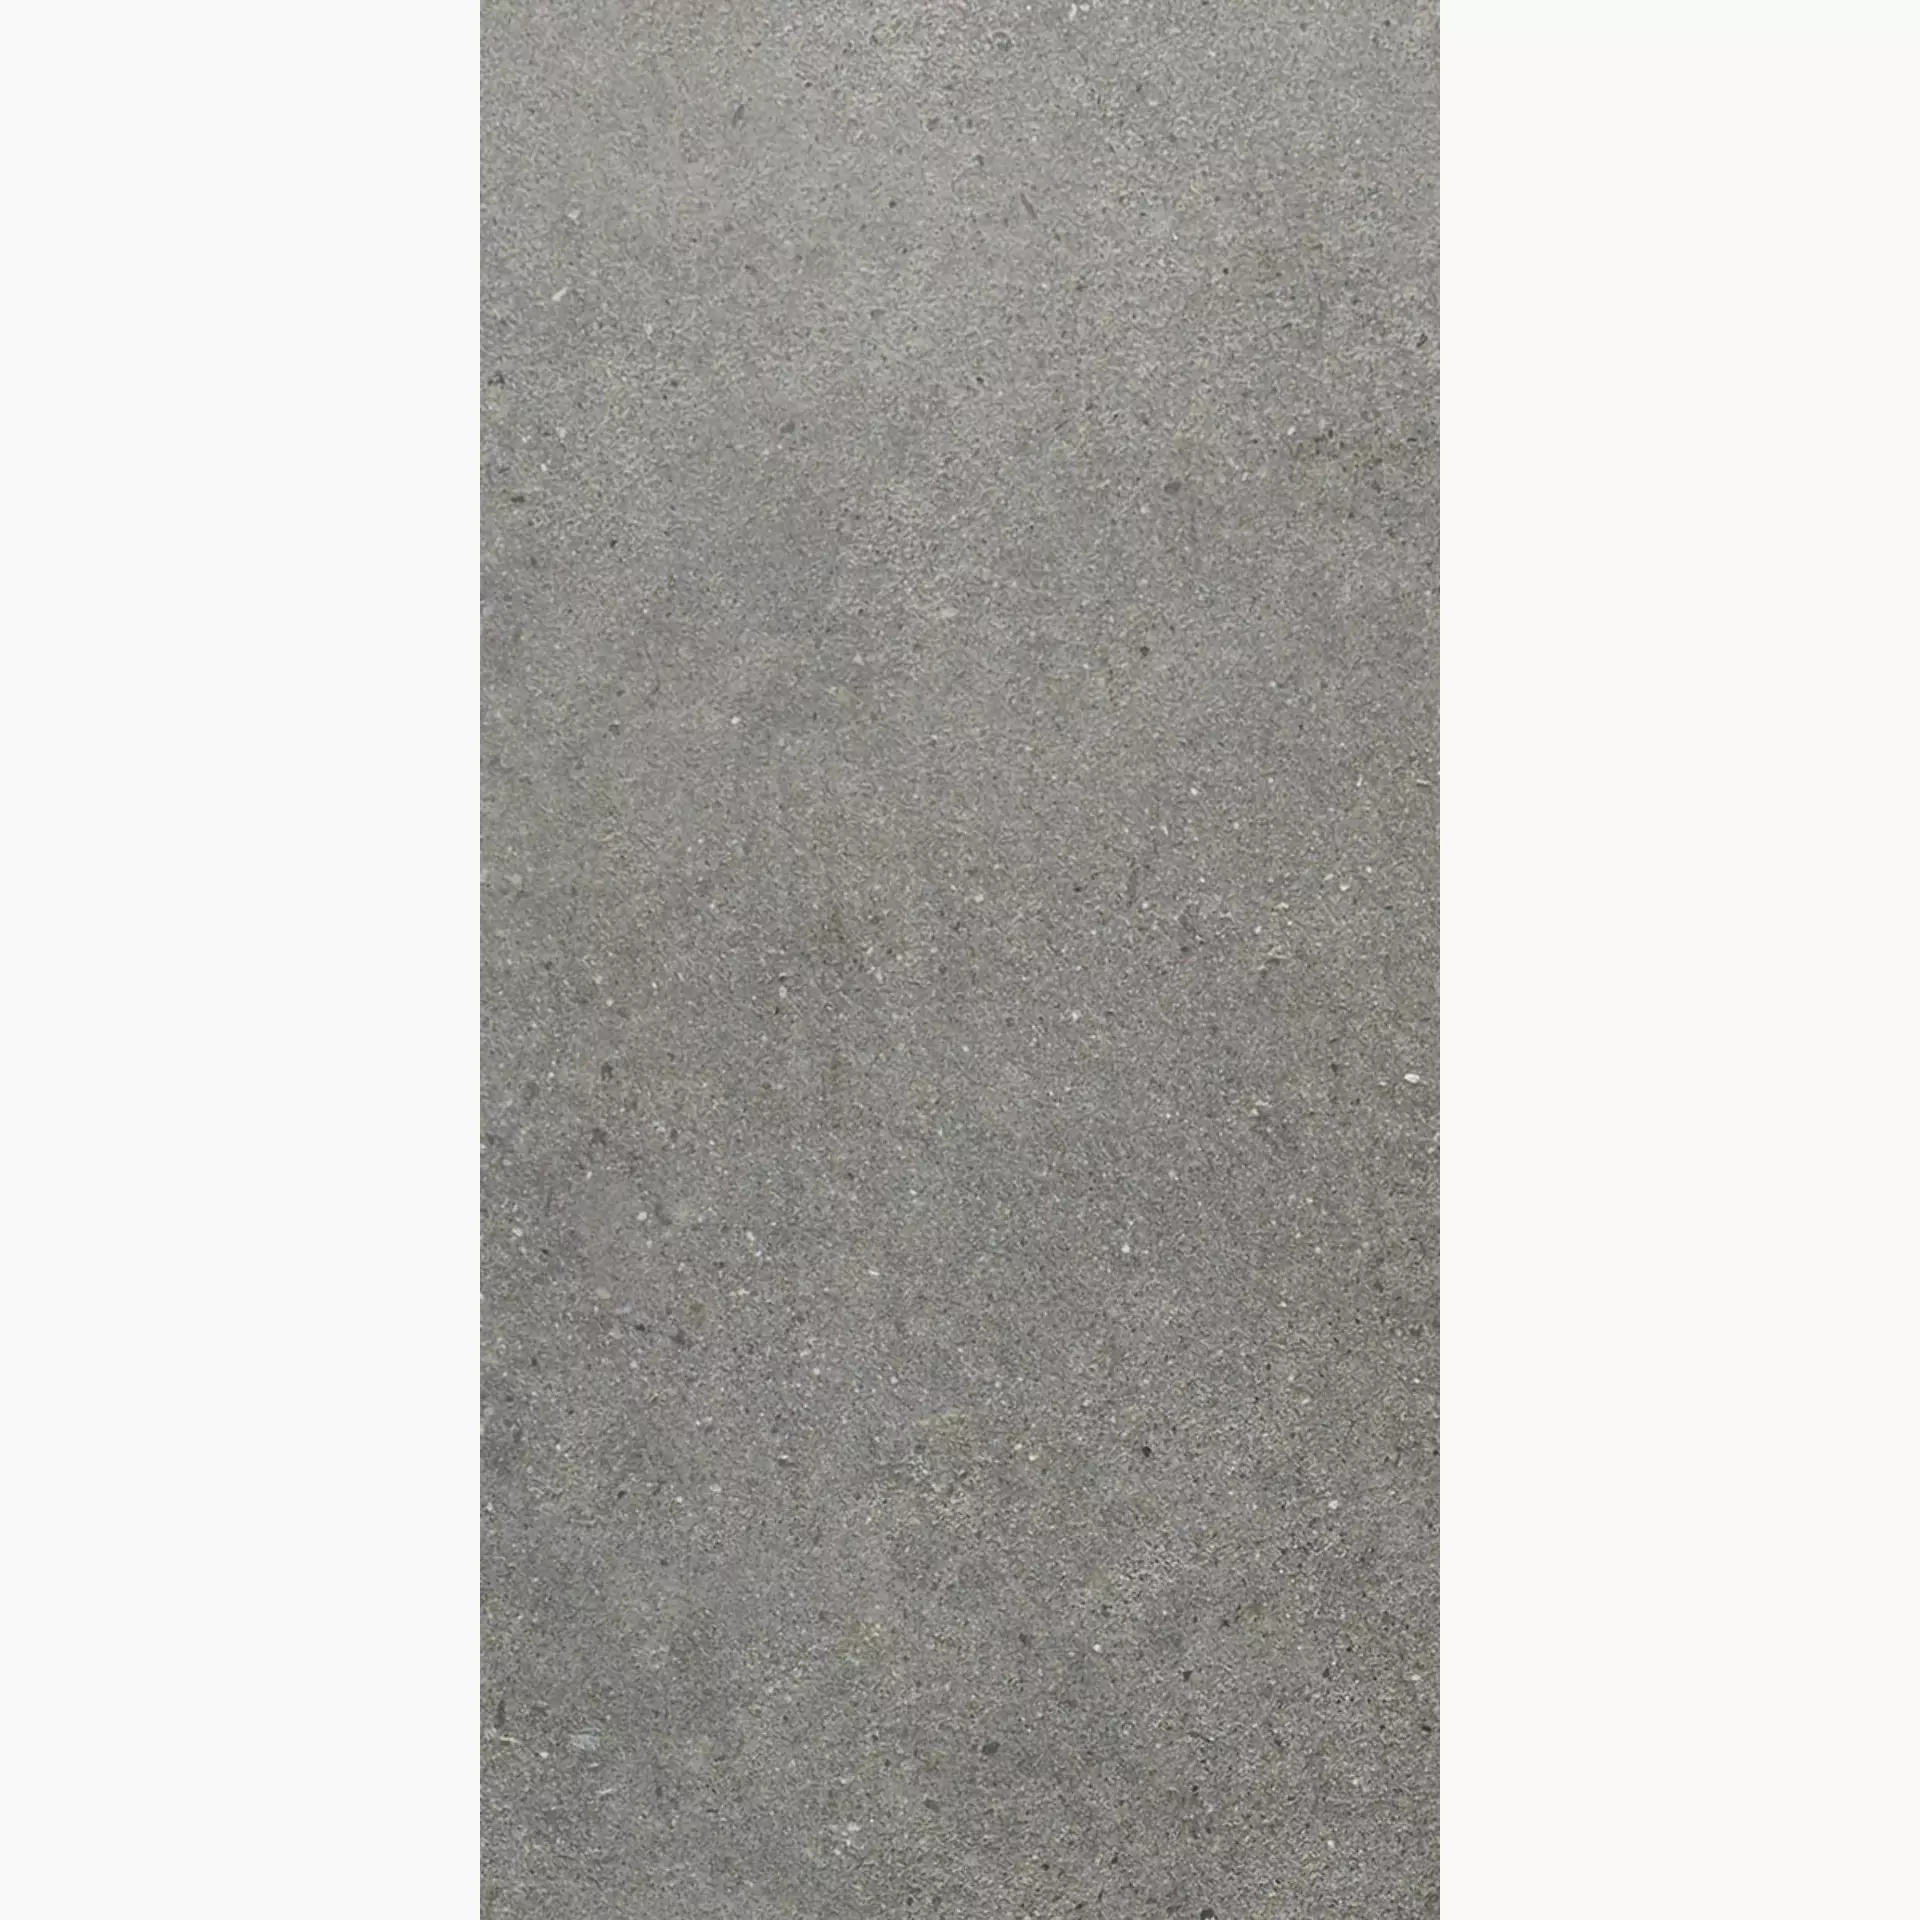 Rondine Loft Grey Naturale J89019 30x60cm rectified 8,5mm